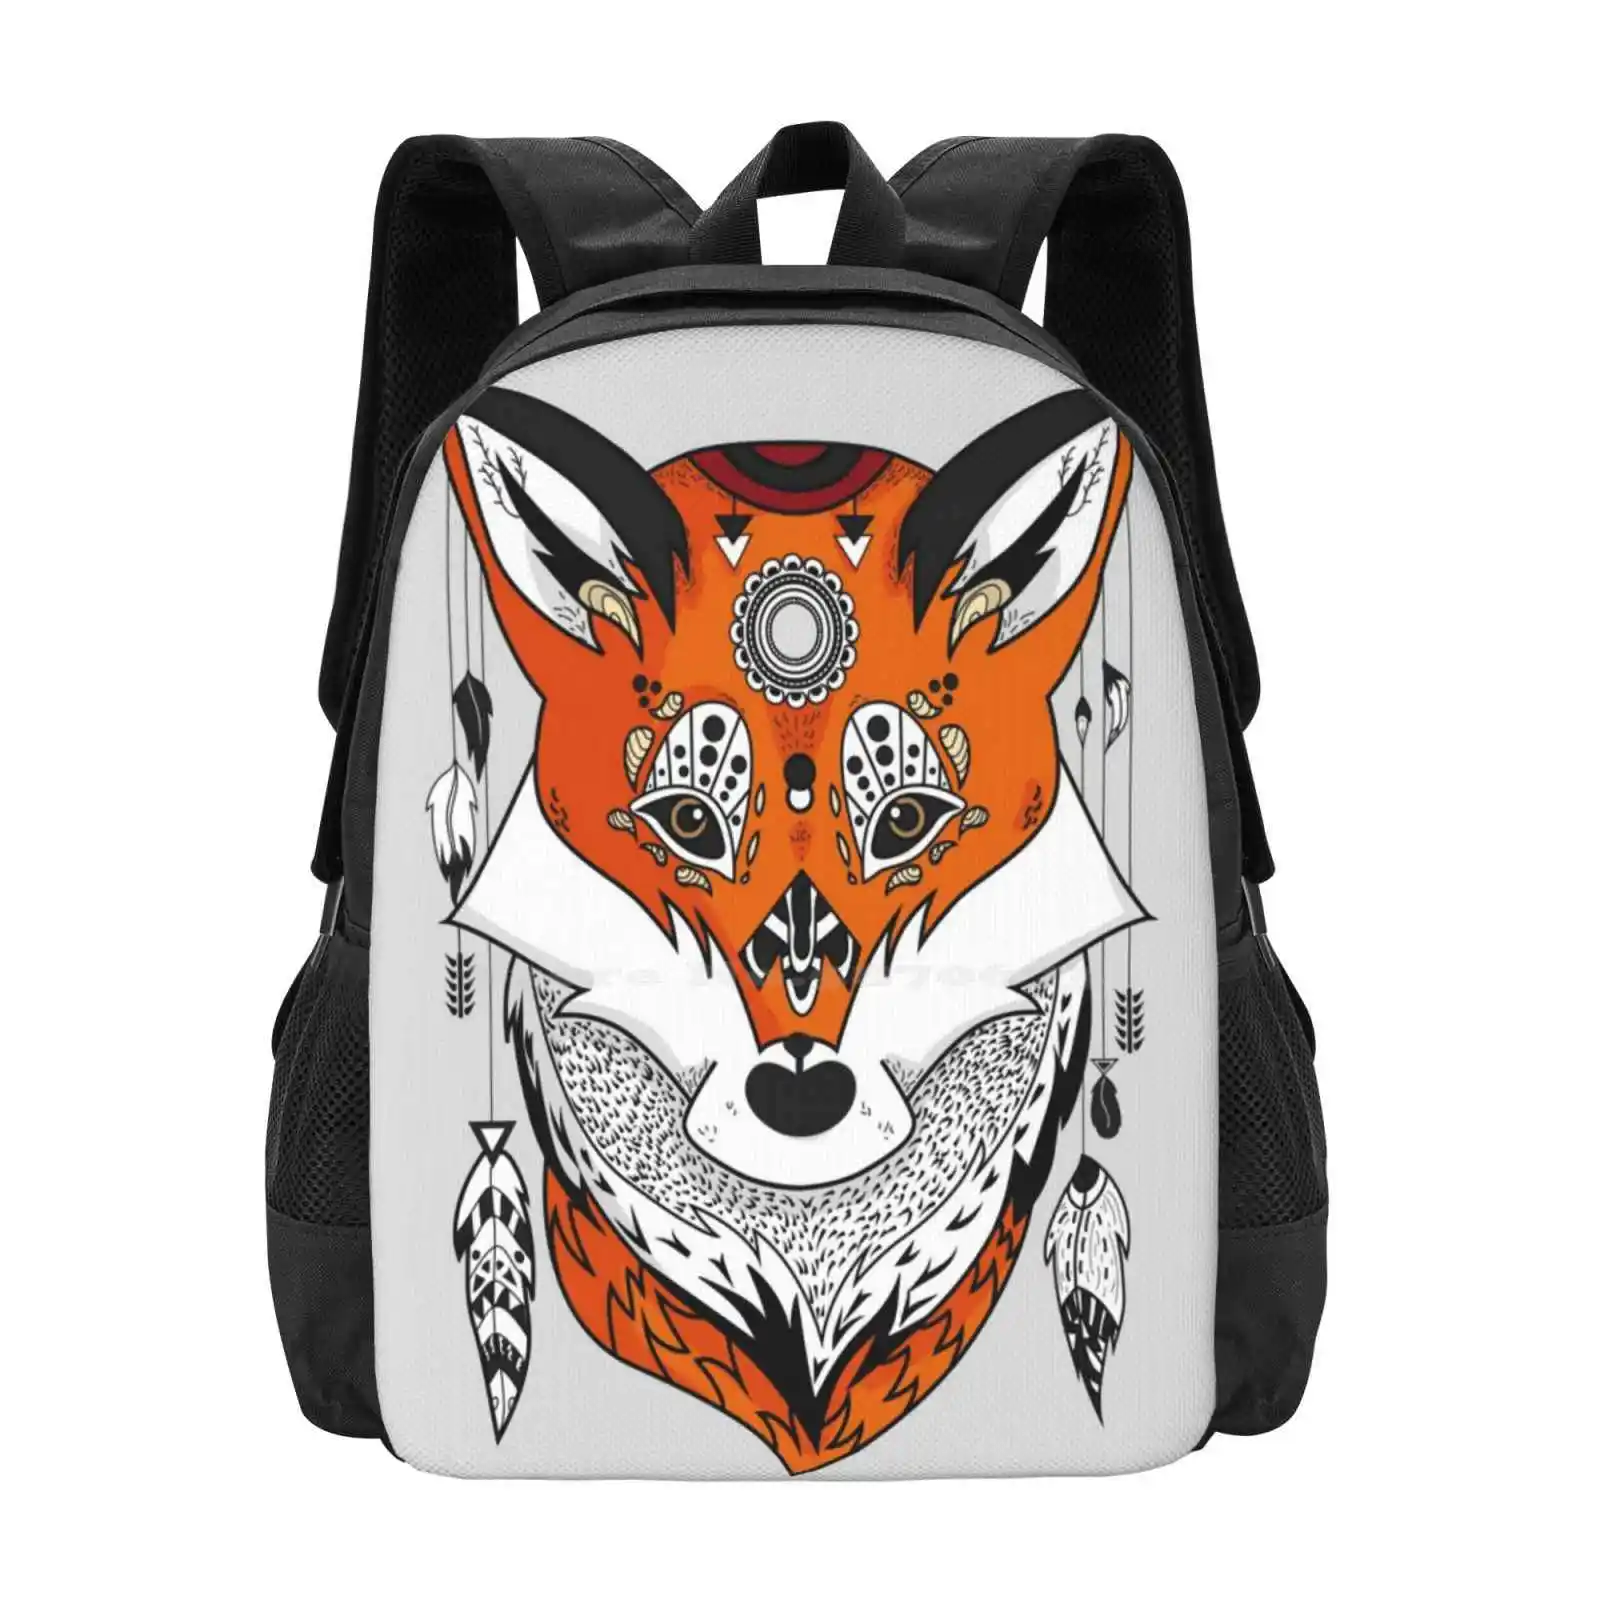 

Teen College Student Backpack Pattern Design Bags Ethnic Vector Orange Animal Forest Nature Cute Kawaii Redhead Firefox Geek